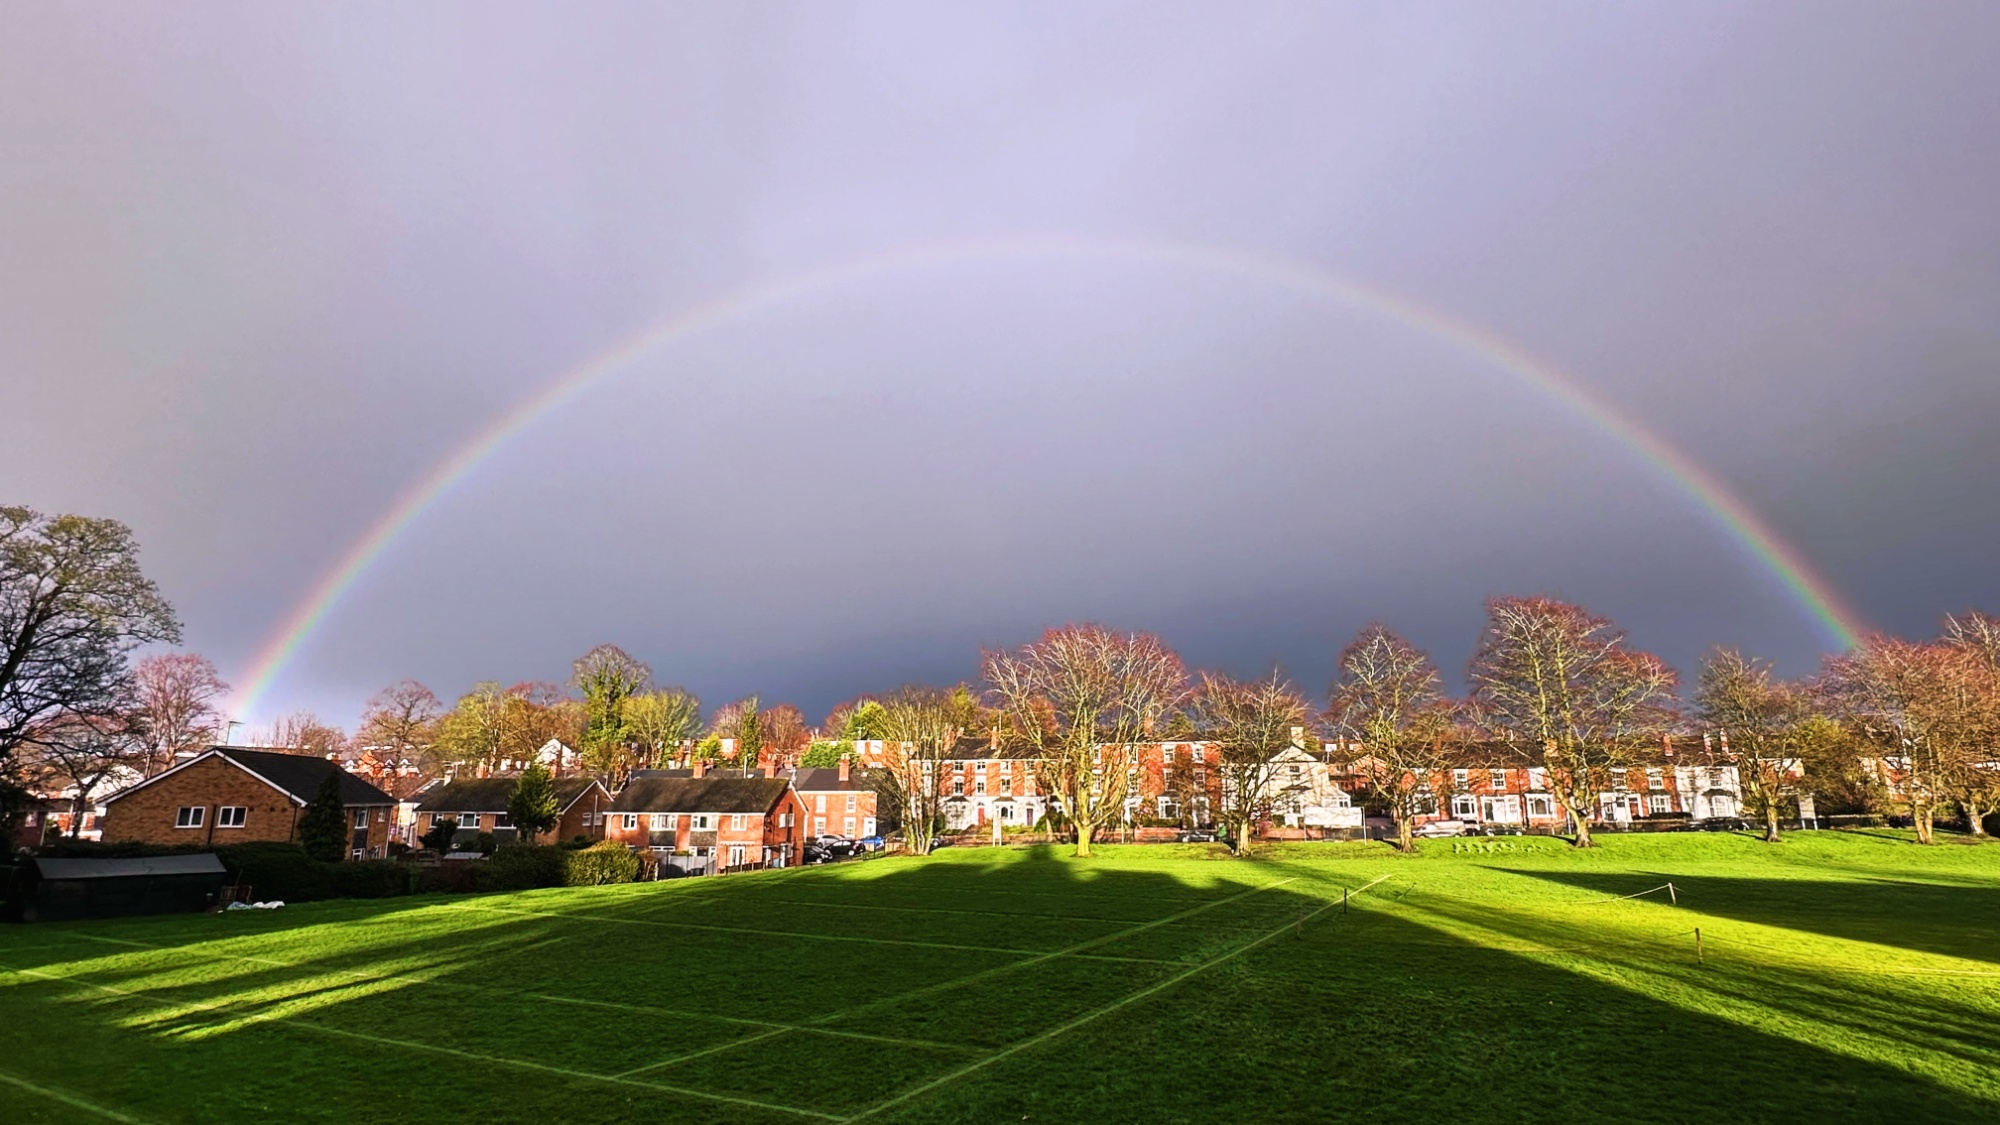 Full rainbow over a green cricket field